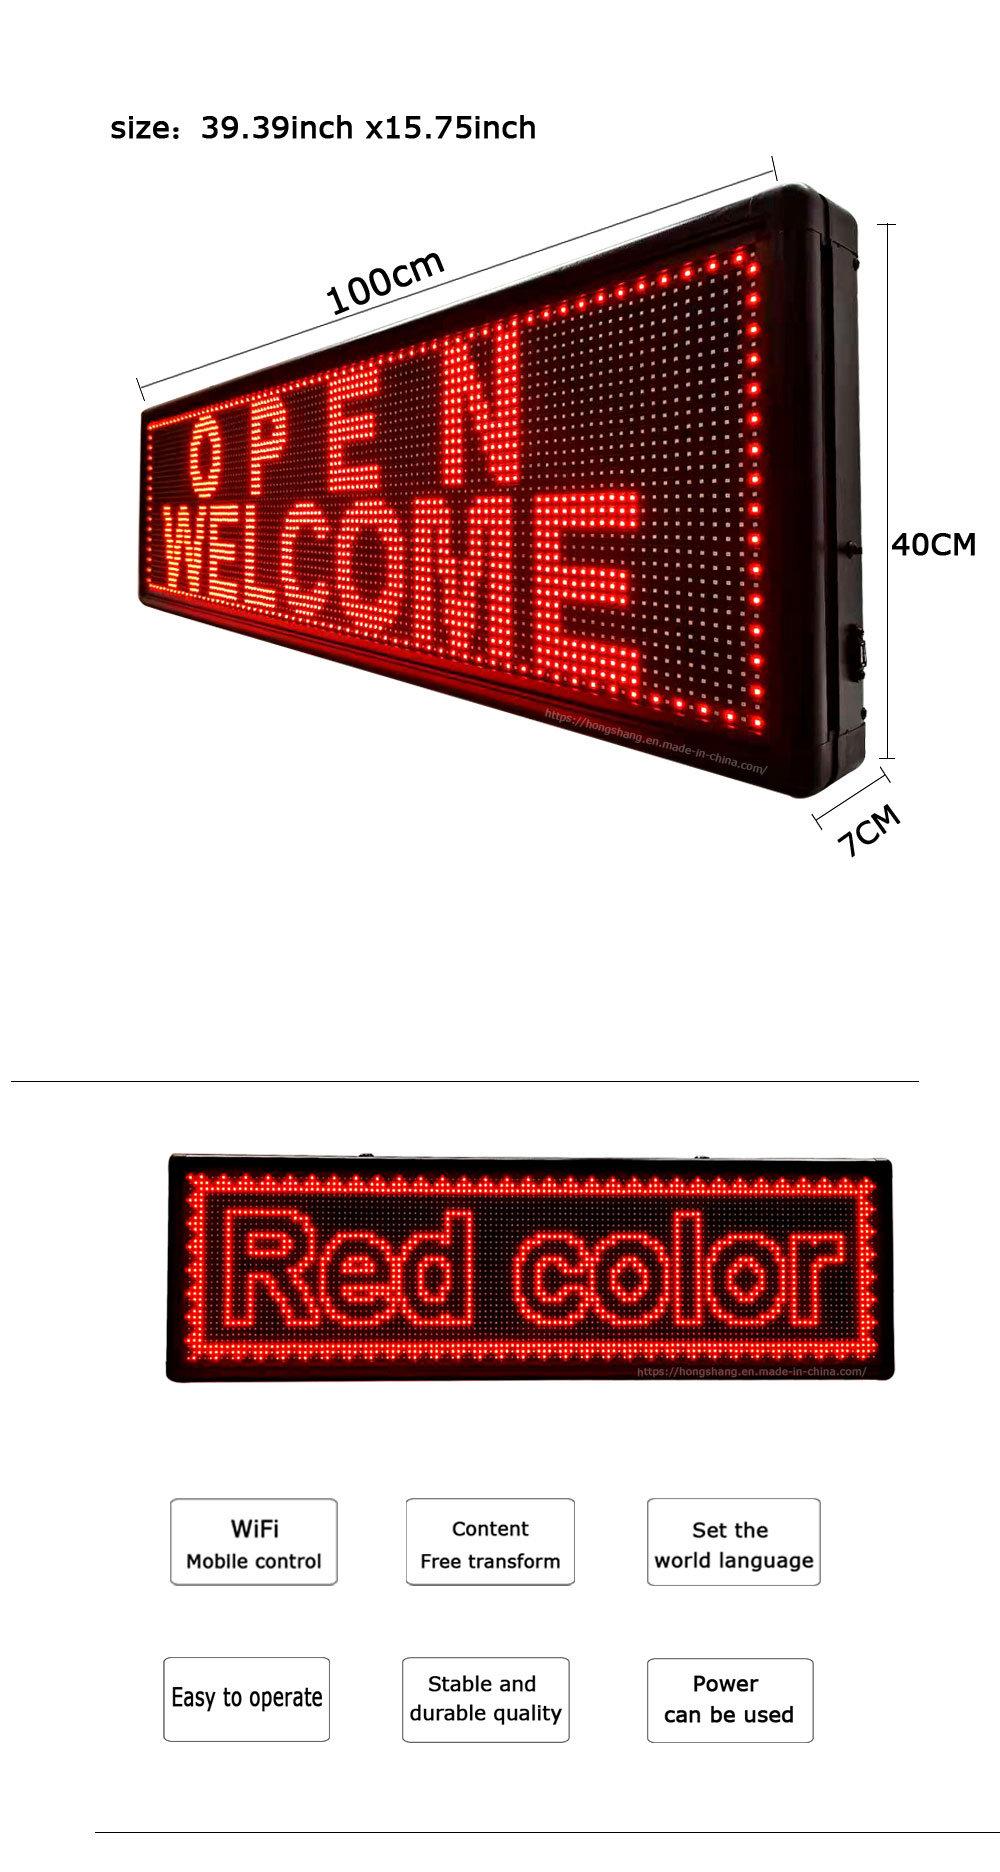 P10 Red Color Outdoor Waterproof T Billboards LED Screens Display